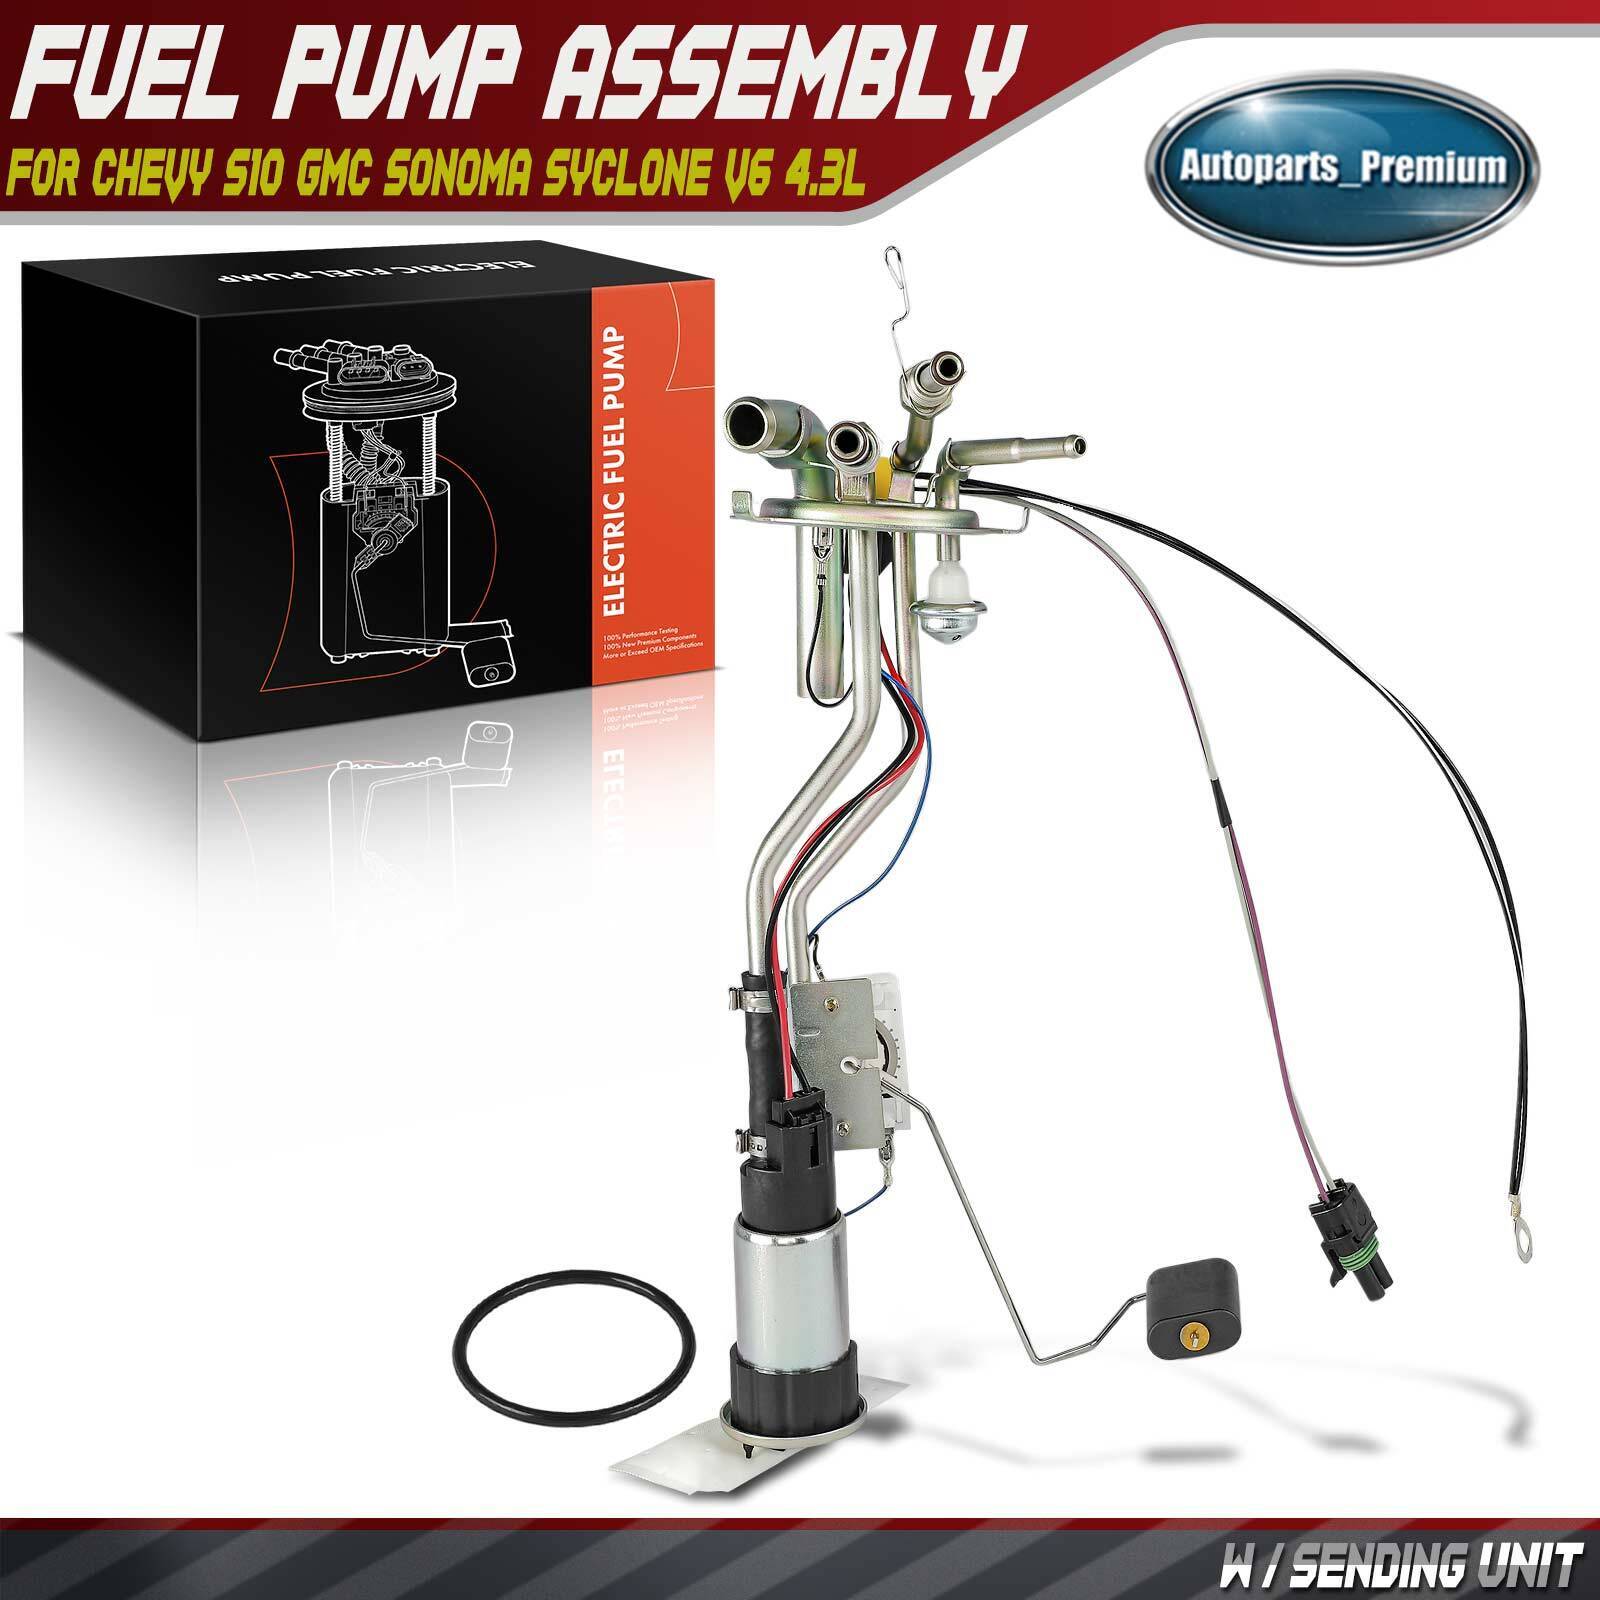 Fuel Pump Assembly w/ Sending Unit for Chevy S10 GMC Sonoma V6 4.3L 1992-1995 